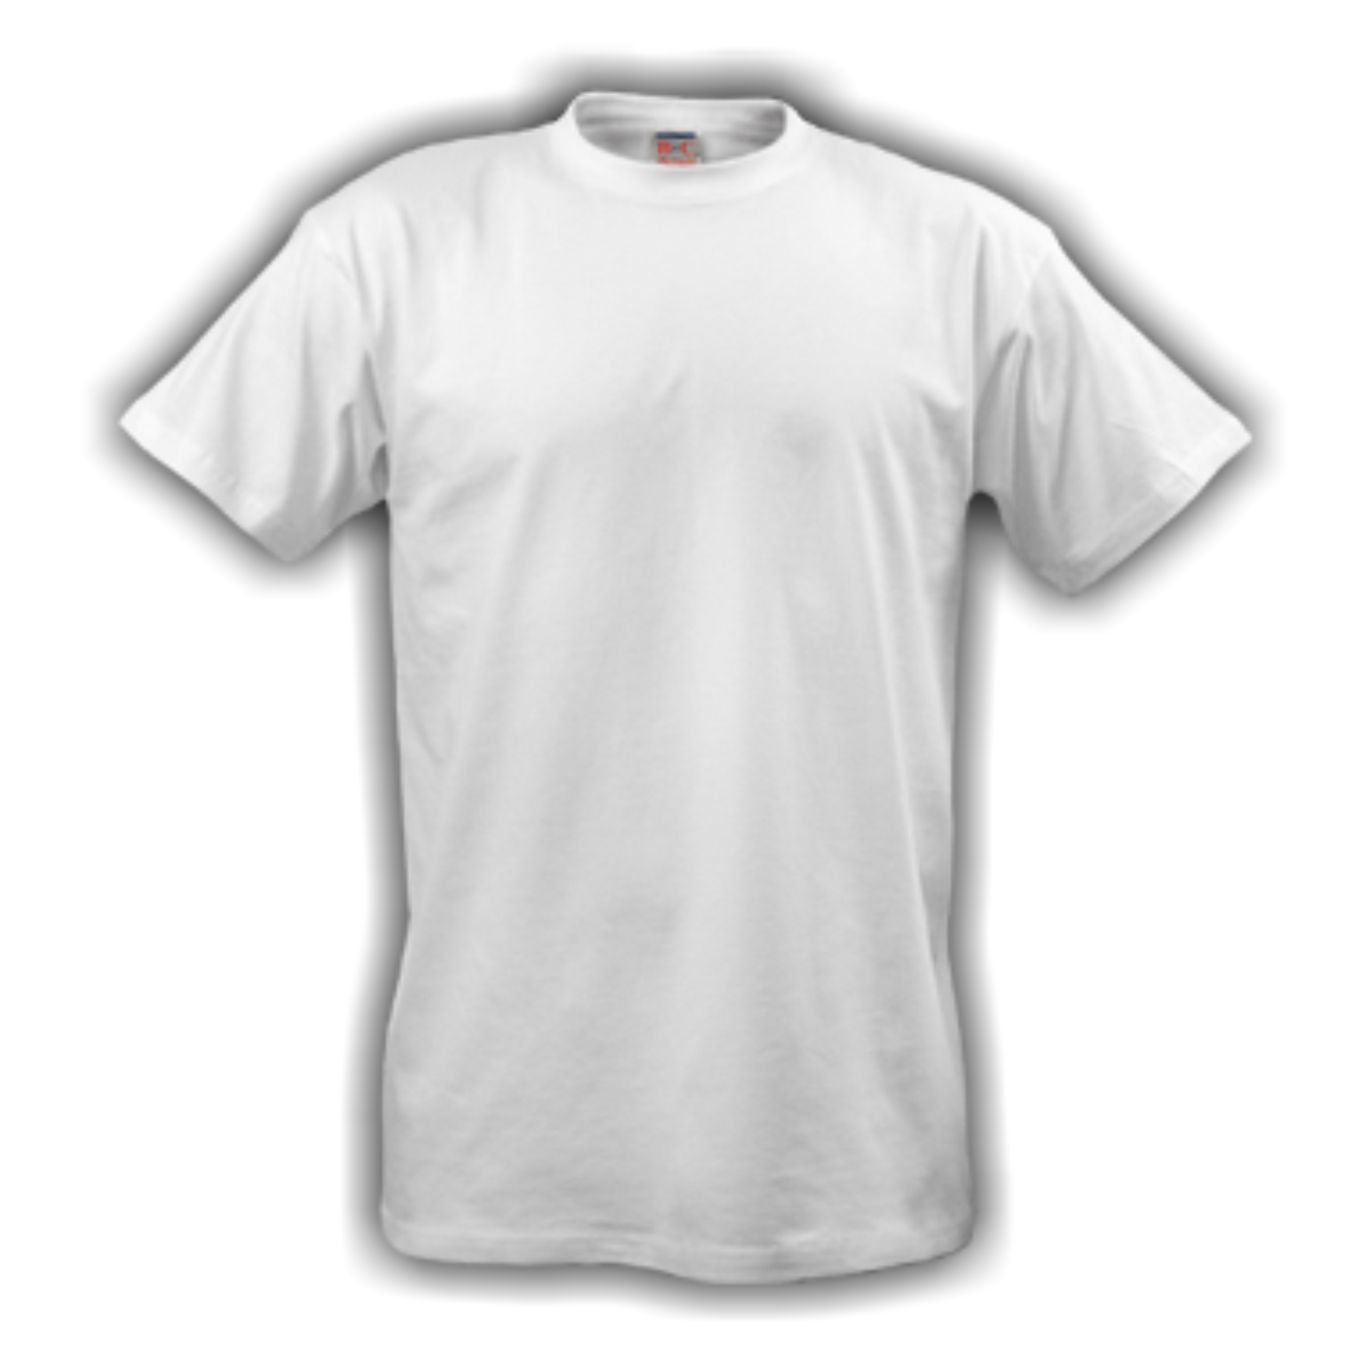 White T-shirt PNG image    图片编号:5426